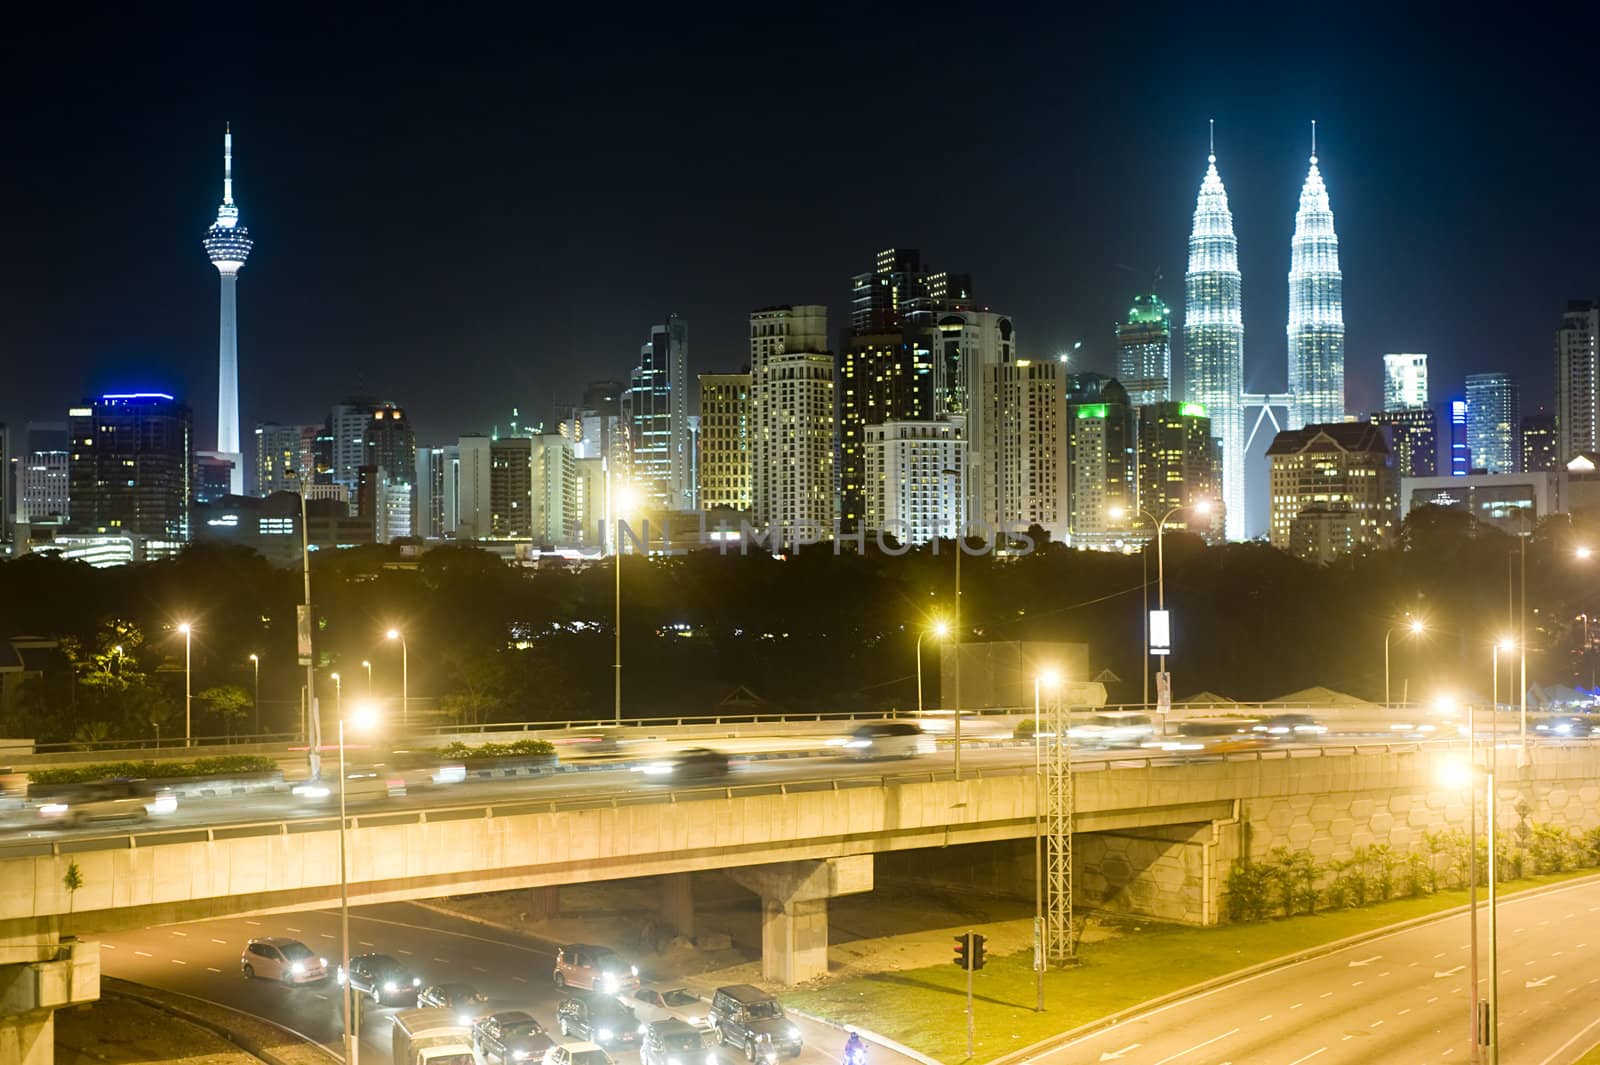 Panorama of Kuala Lumpur at night. Malaysia